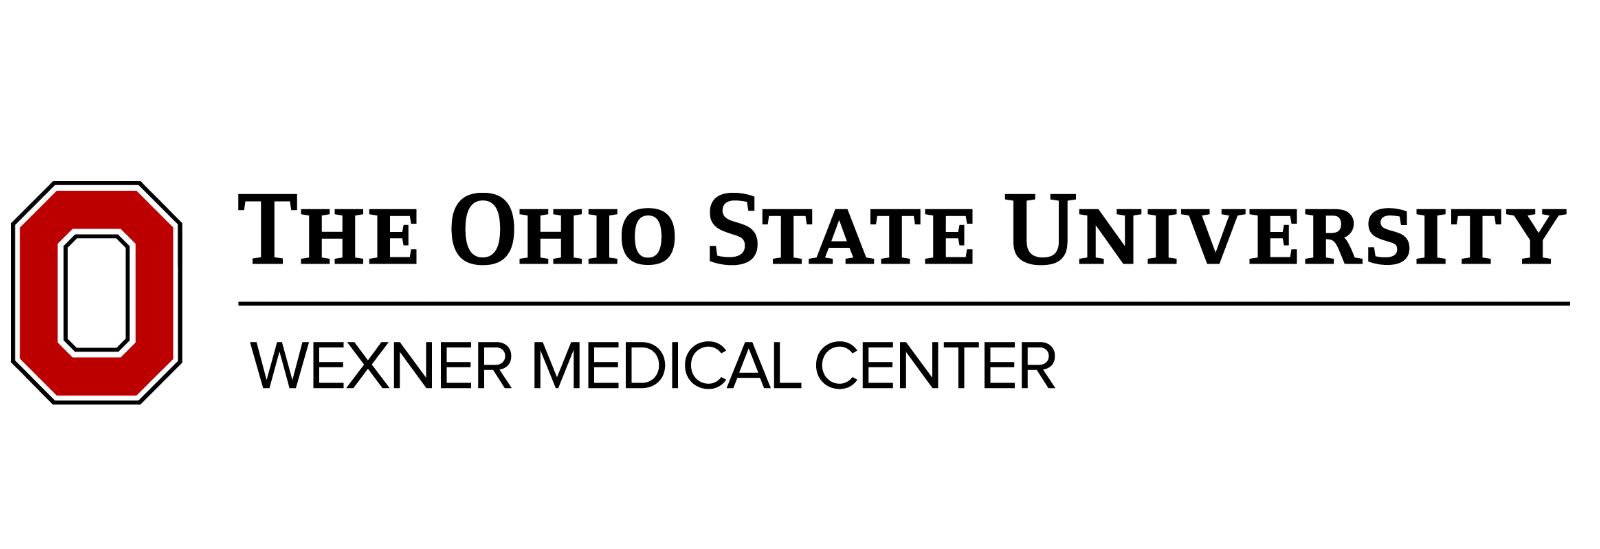 Ohio State University Wexner Medical Center sponsor